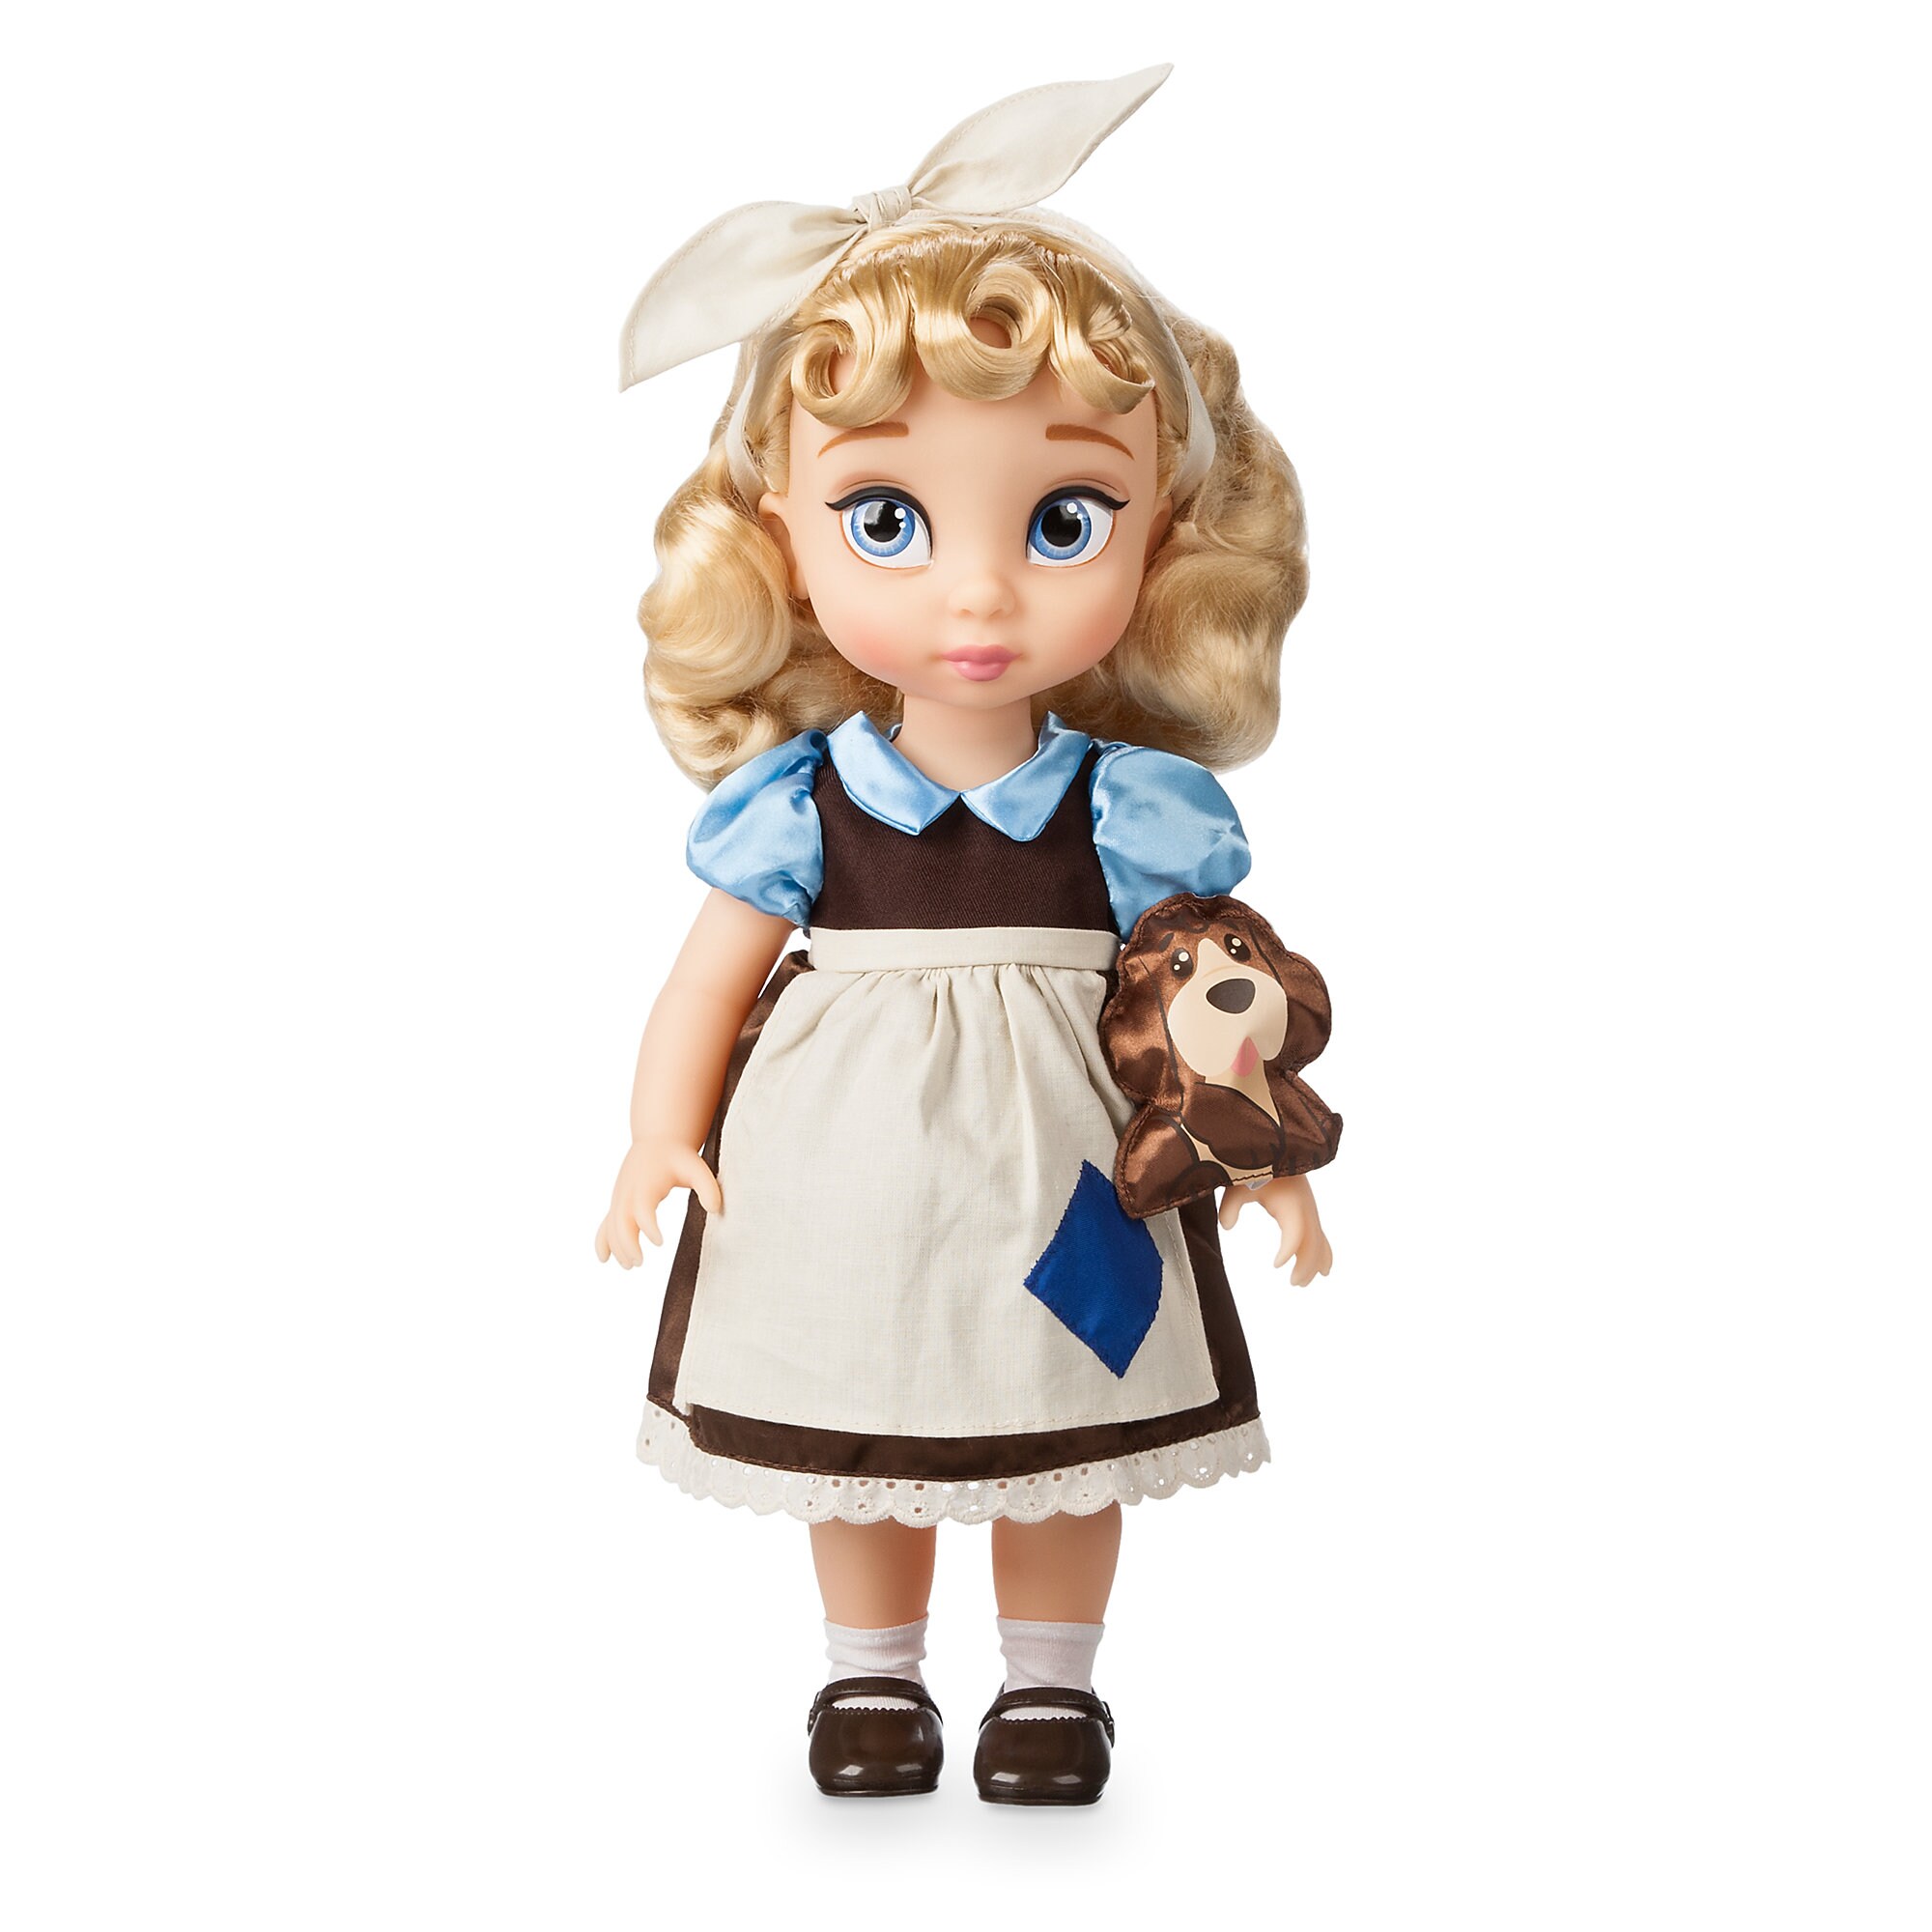 Disney Animators' Collection Cinderella Doll - 16''